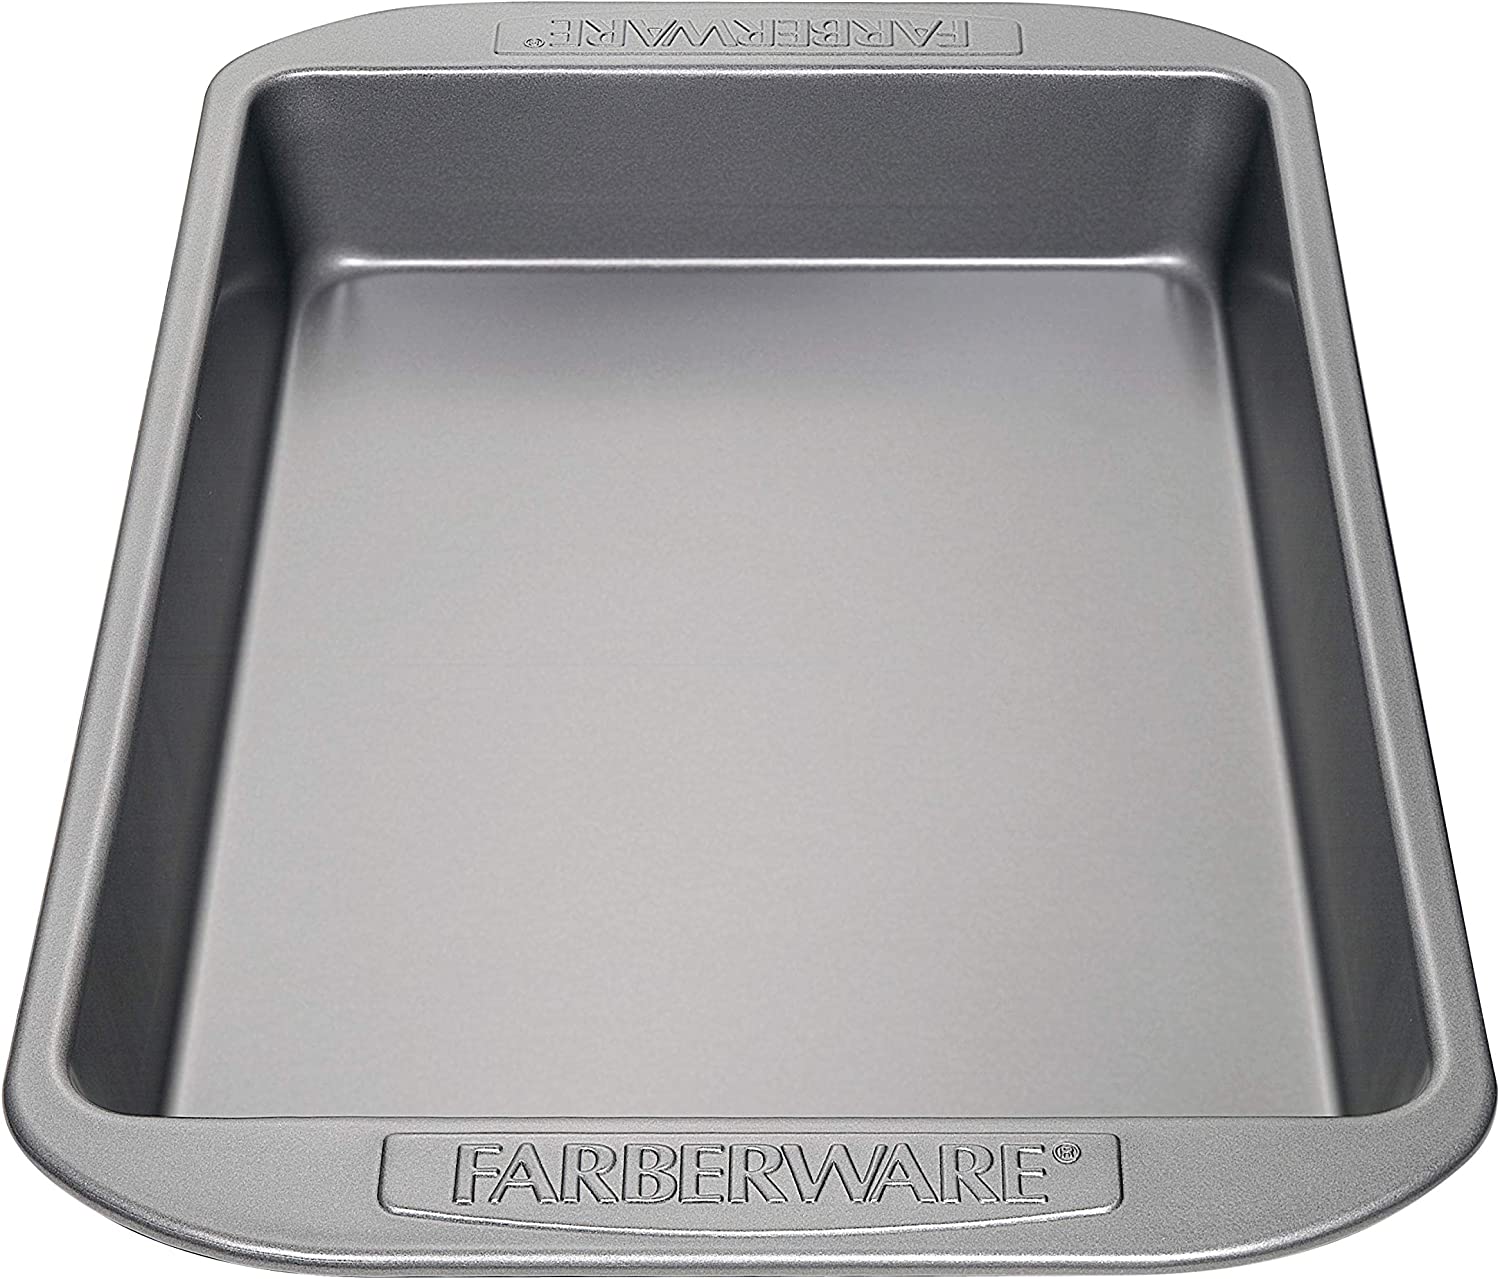 https://www.dontwasteyourmoney.com/wp-content/uploads/2023/01/farberware-oven-safe-alloy-steel-9x13-inch-baking-pan-9-x-13-baking-pan.jpg